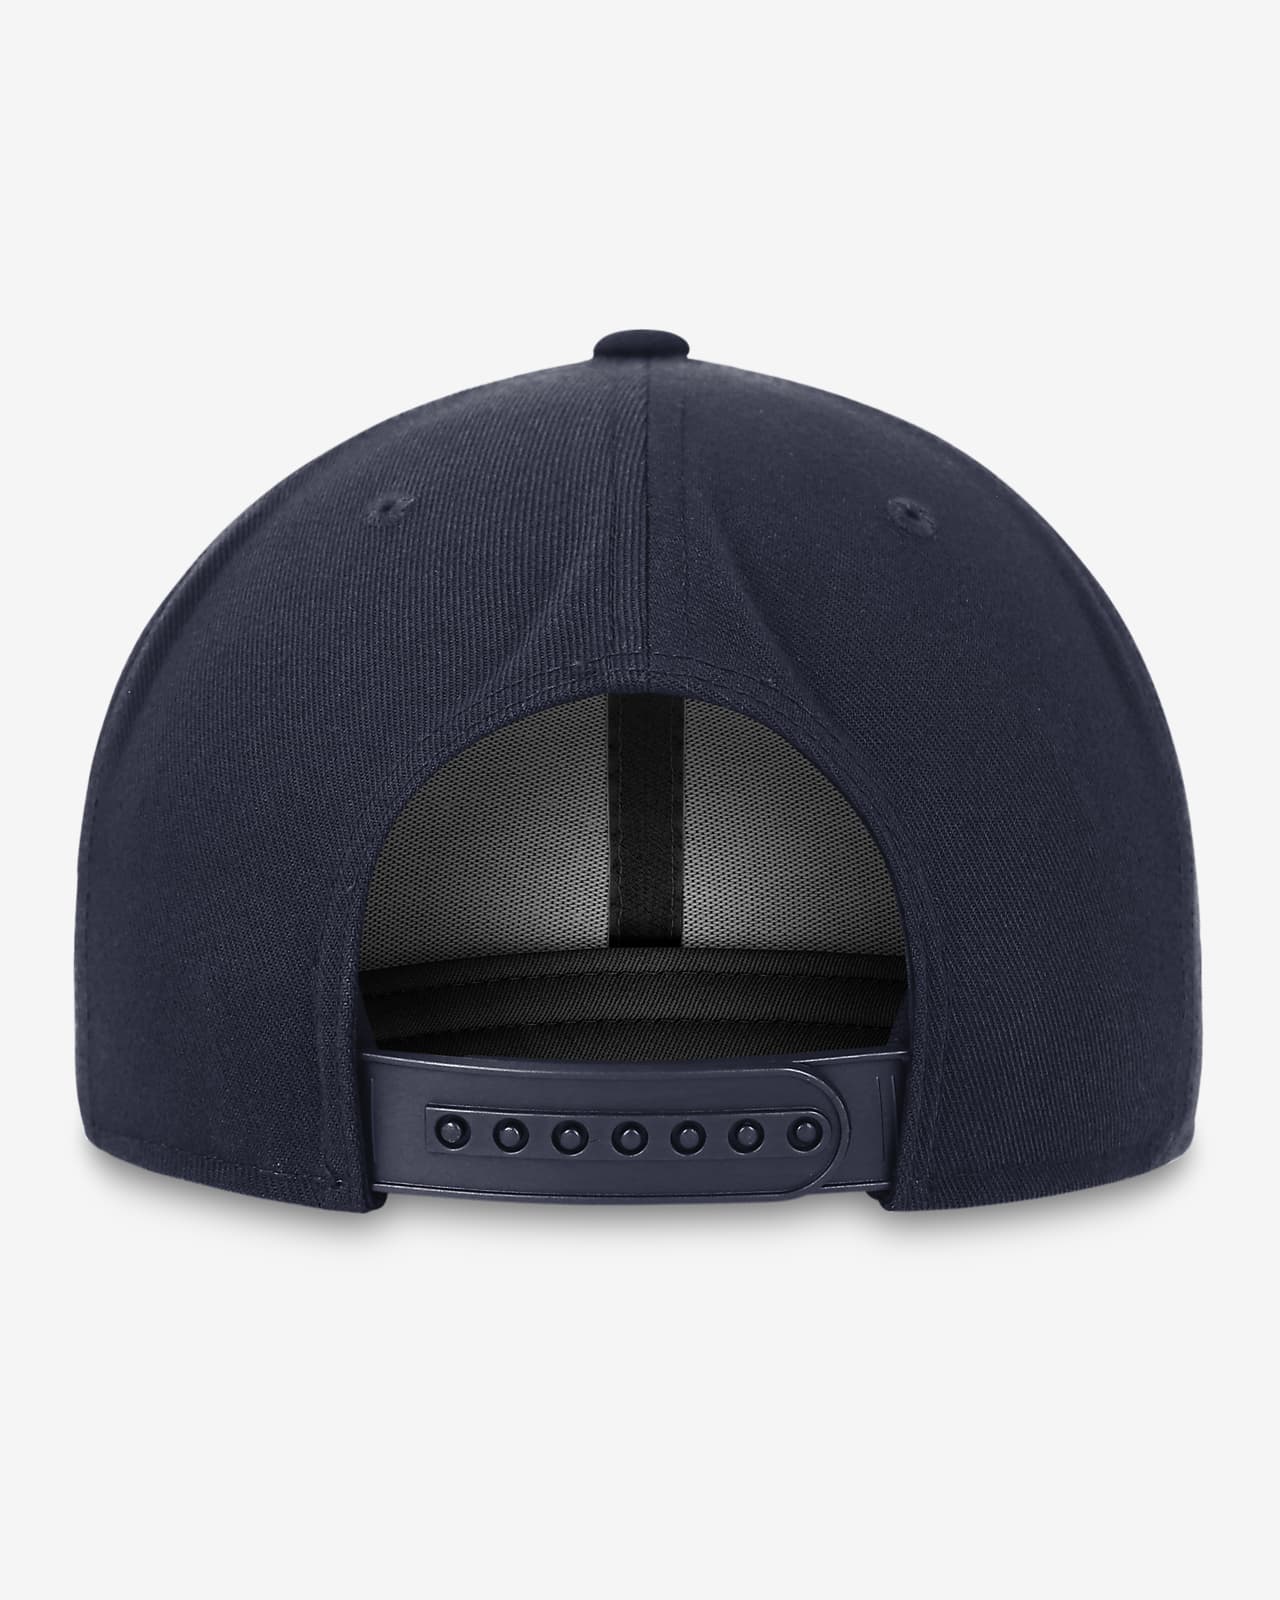 Official Houston Astros Nike Hats, Astros Cap, Nike Astros Hats